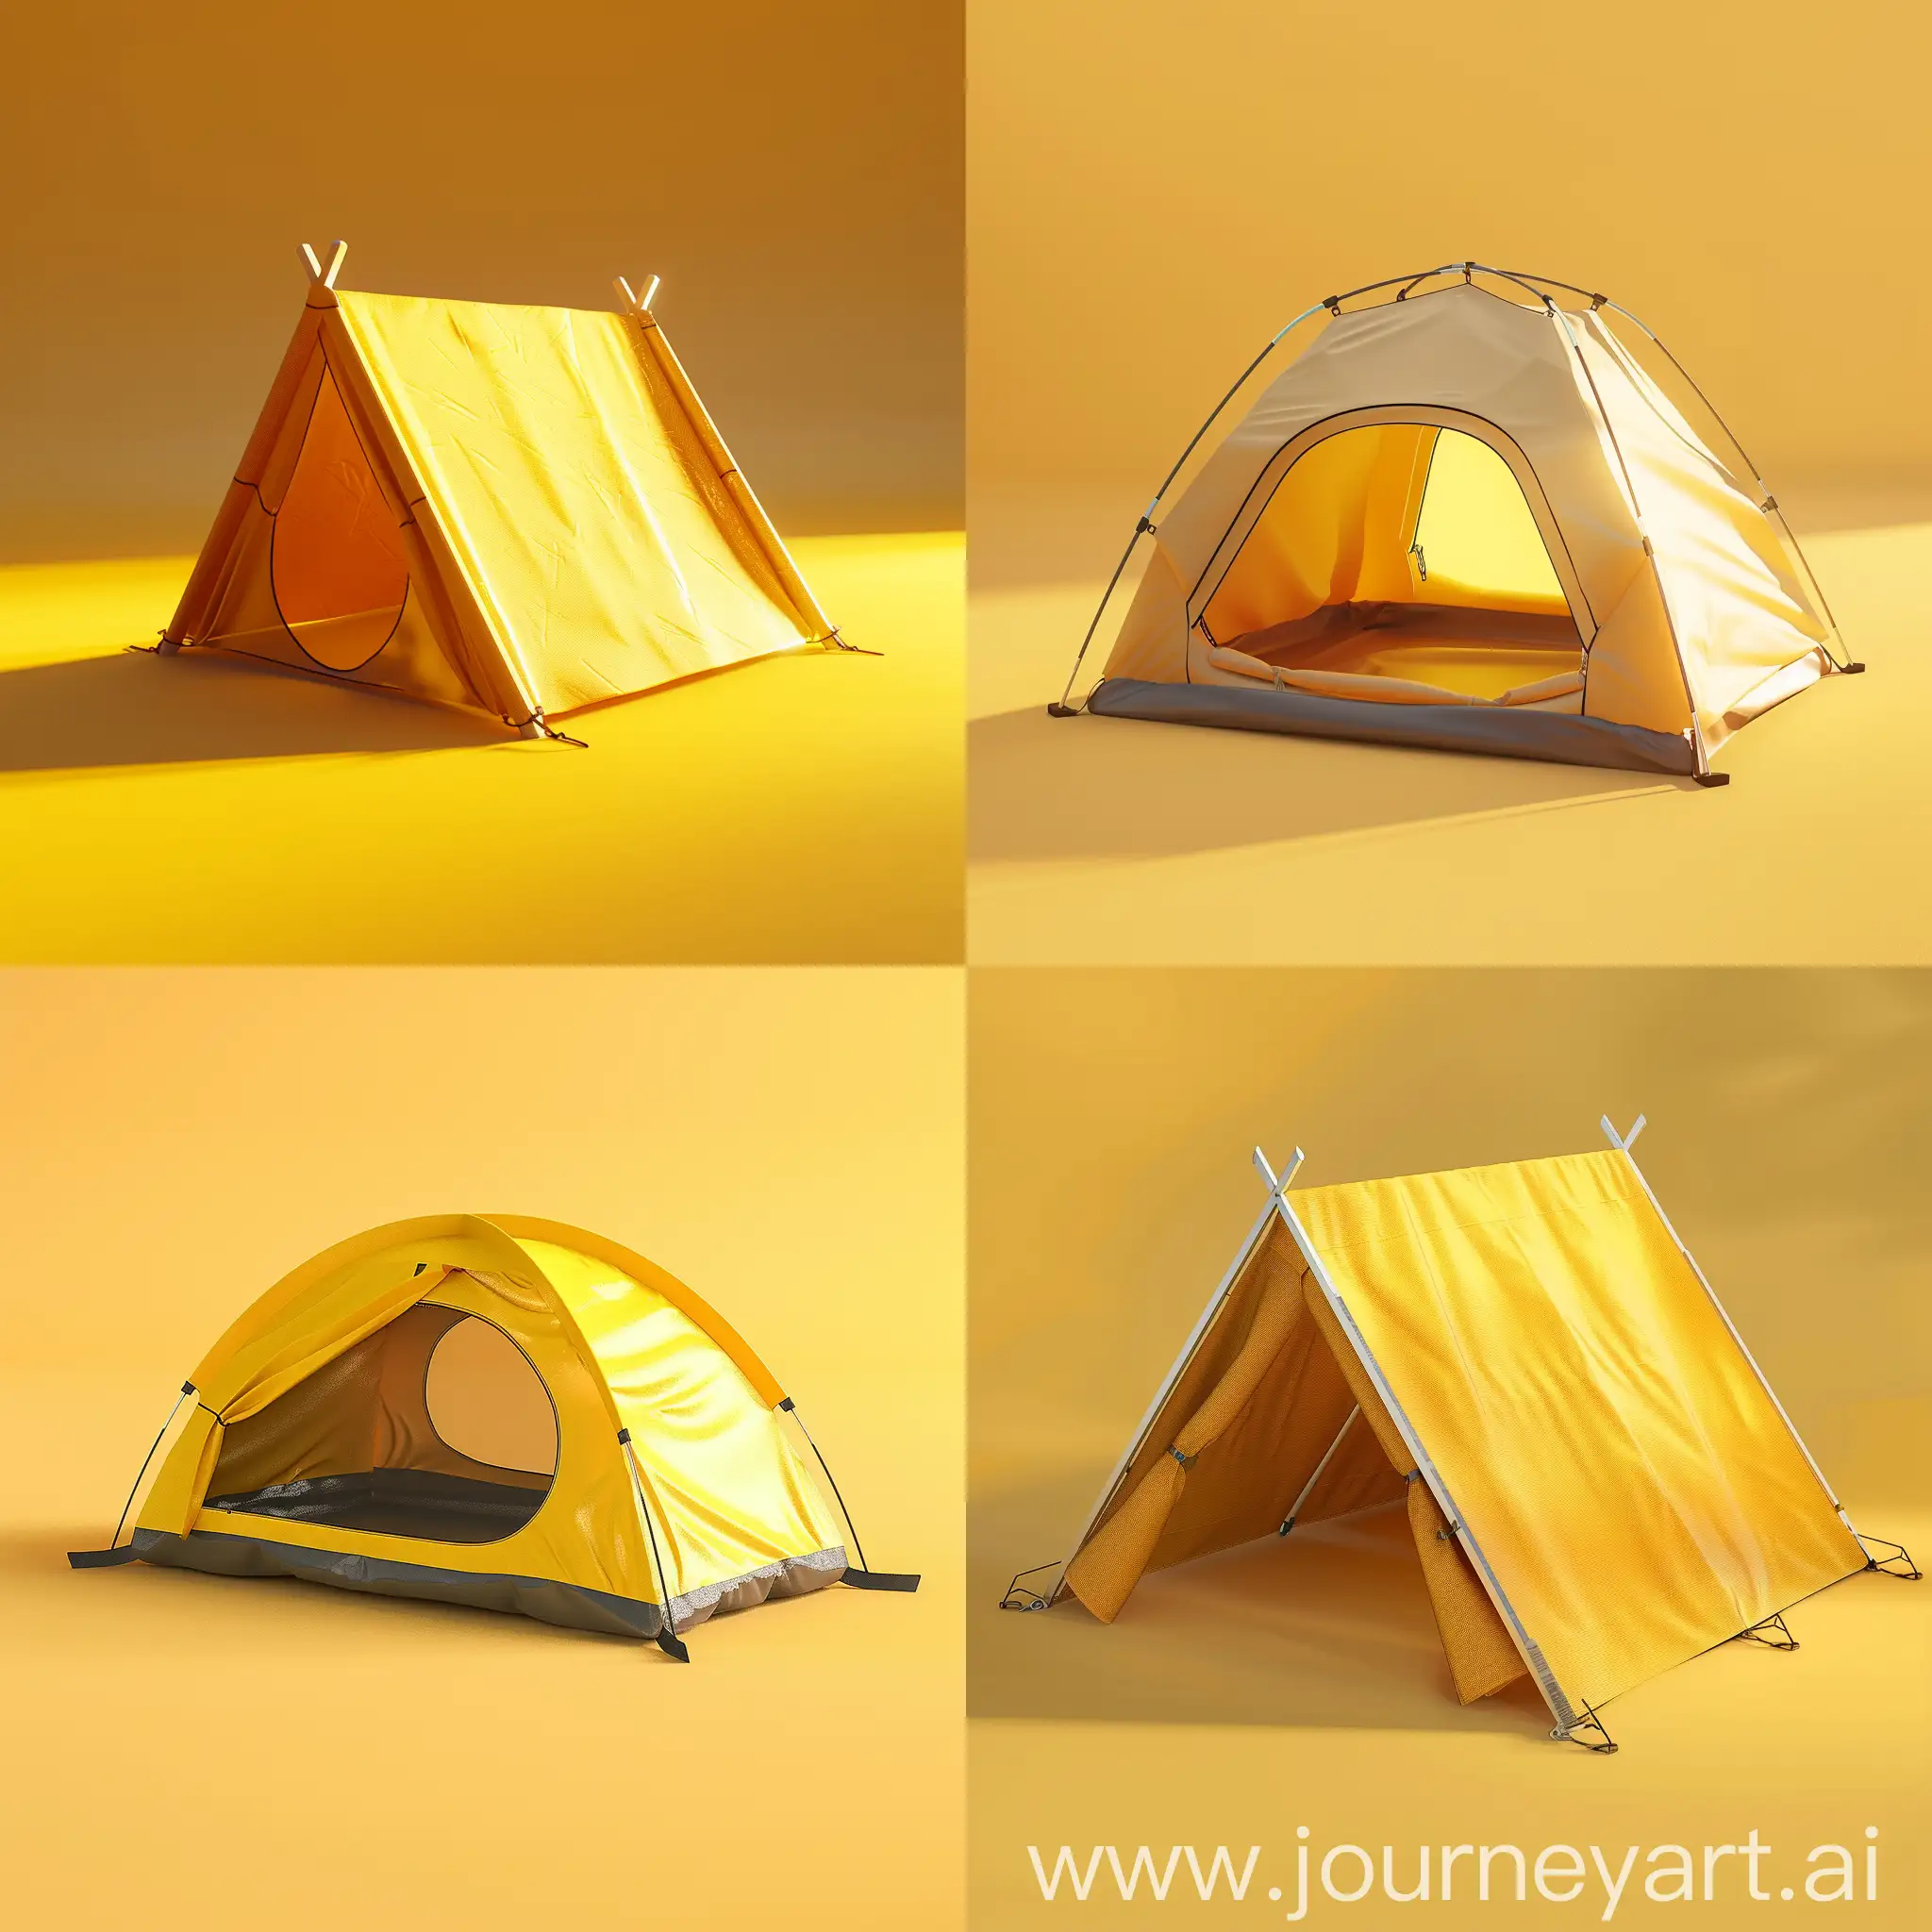 Outdoor-Tent-Scene-with-Bright-Yellow-Lighting-in-3D-Render